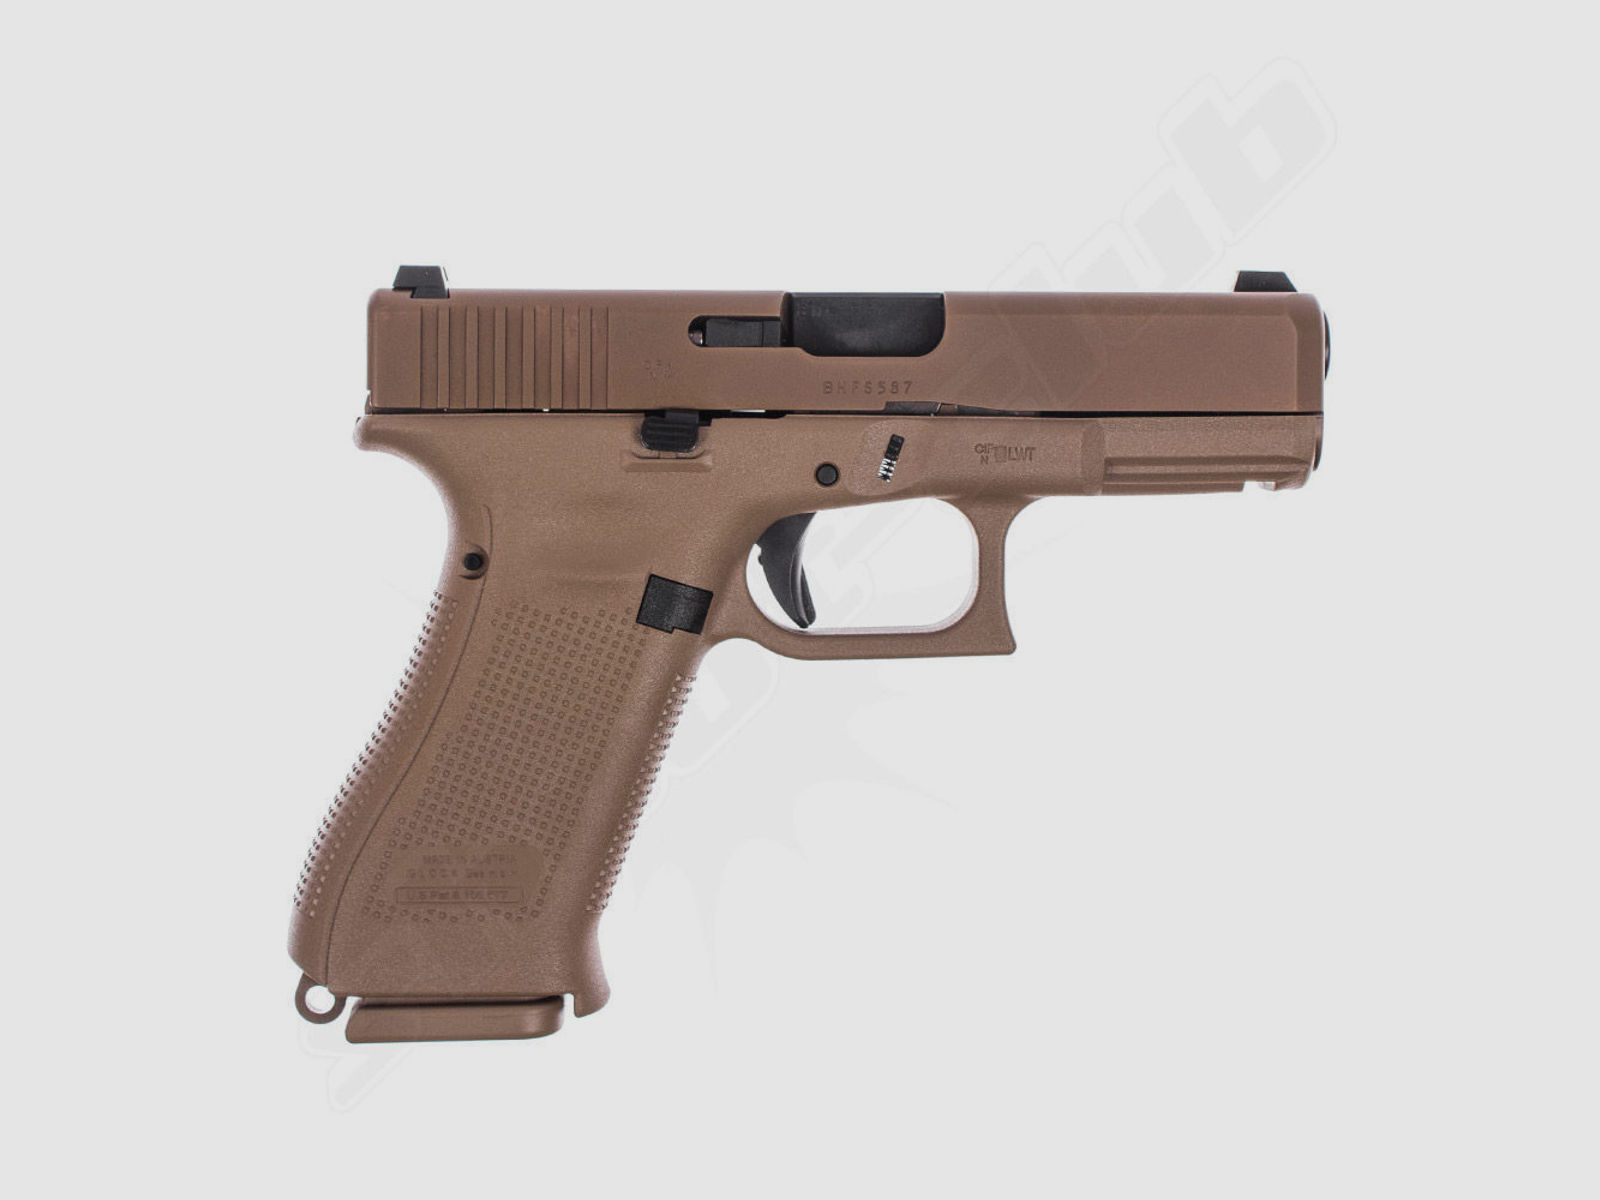 Glock 19 X im Kaliber 9mm Luger